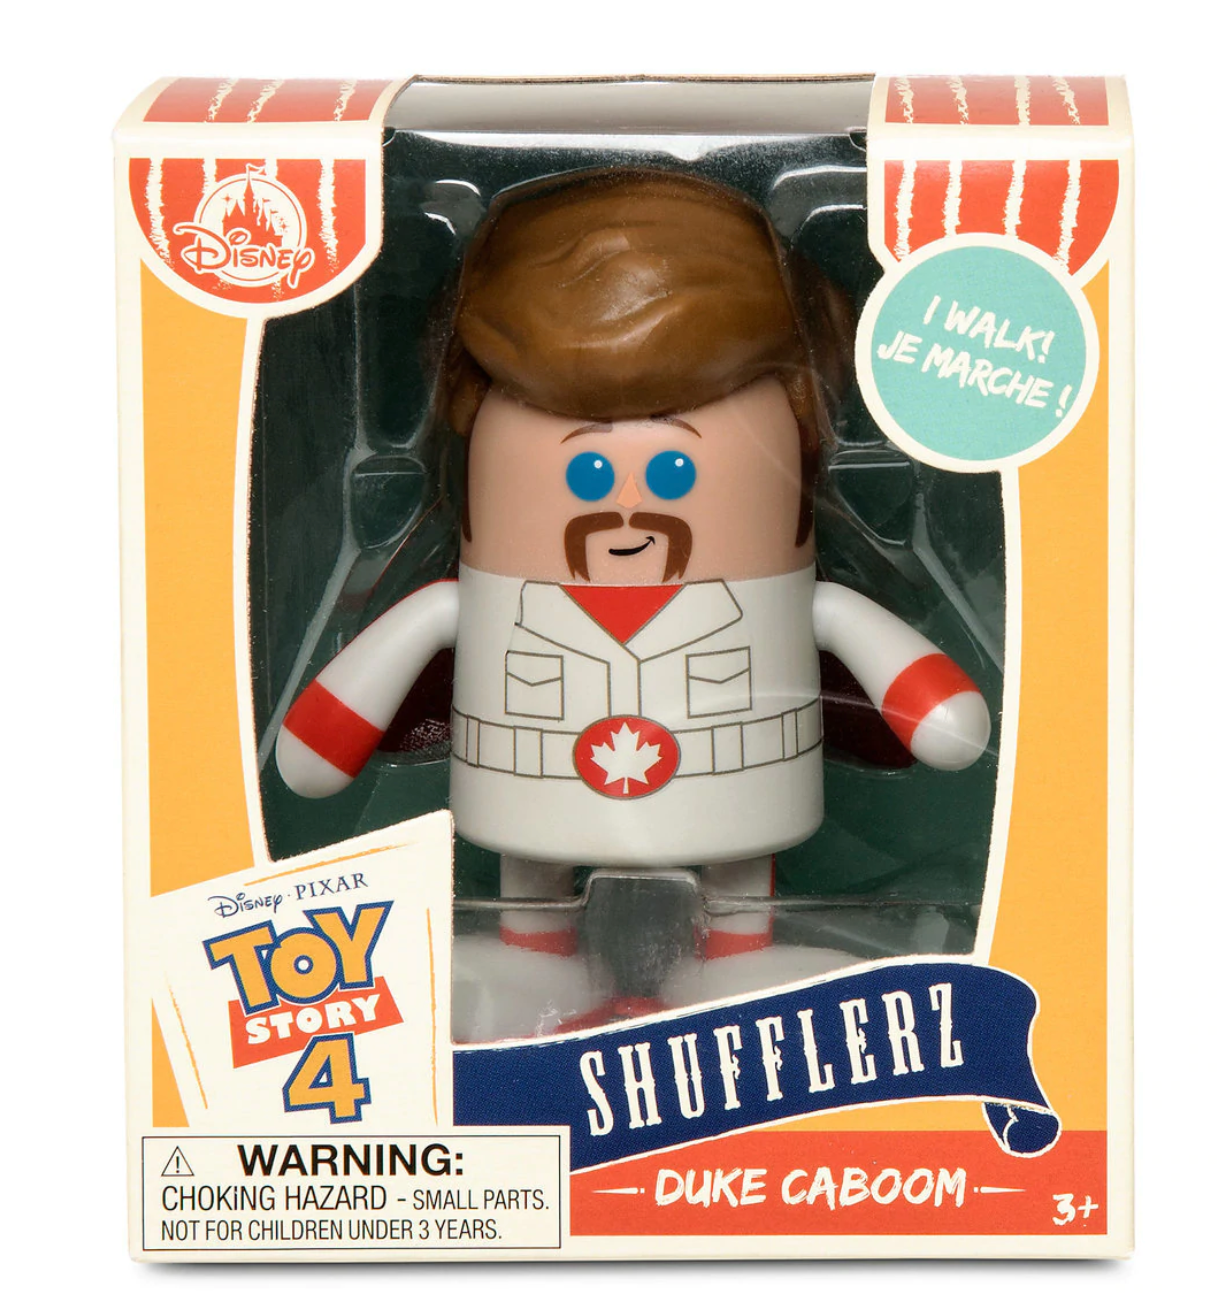 Disney Toy Story 4 Duke Caboom Shufflerz Walking Figure New with Box